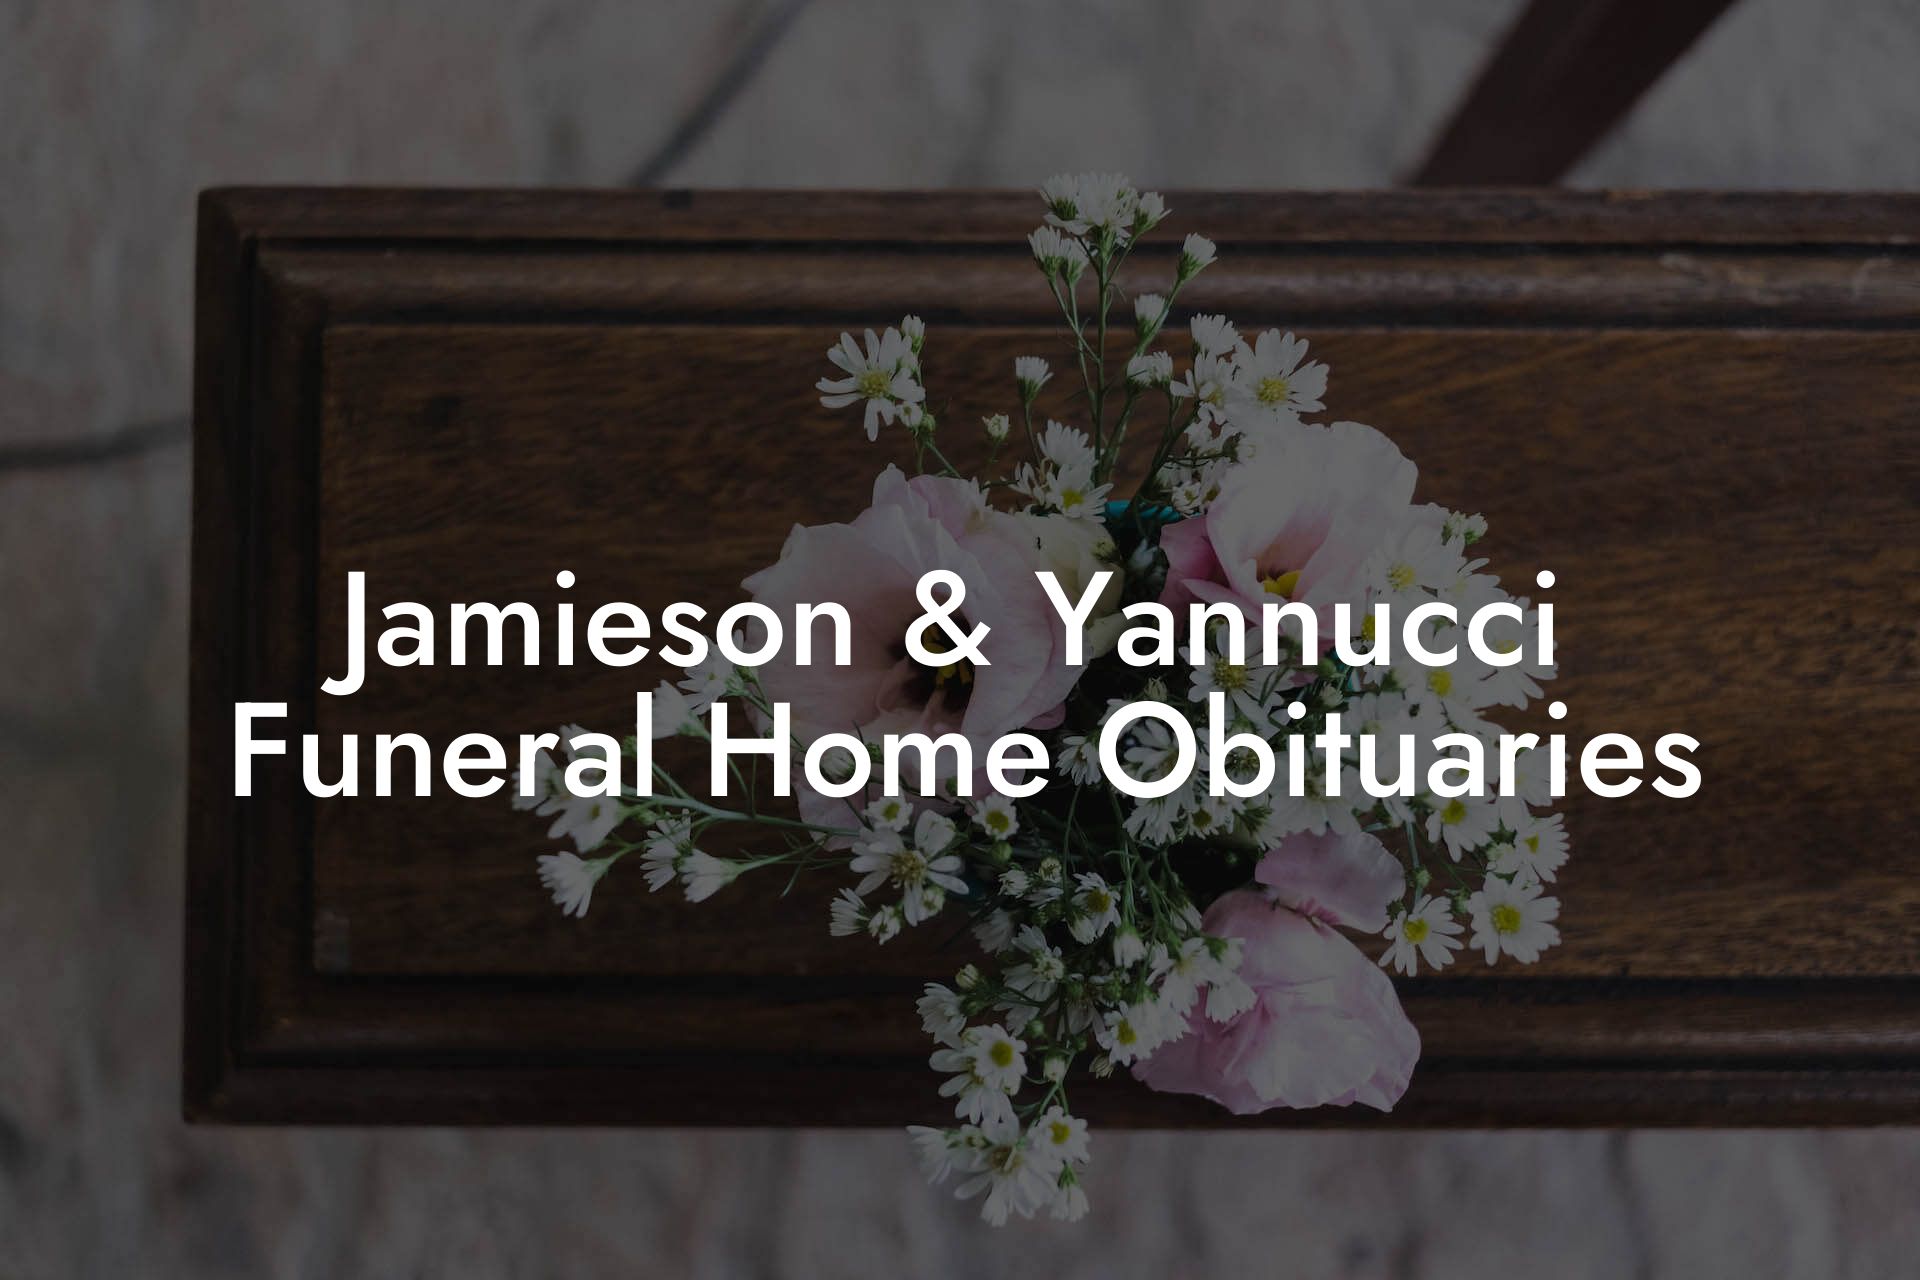 Jamieson & Yannucci Funeral Home Obituaries